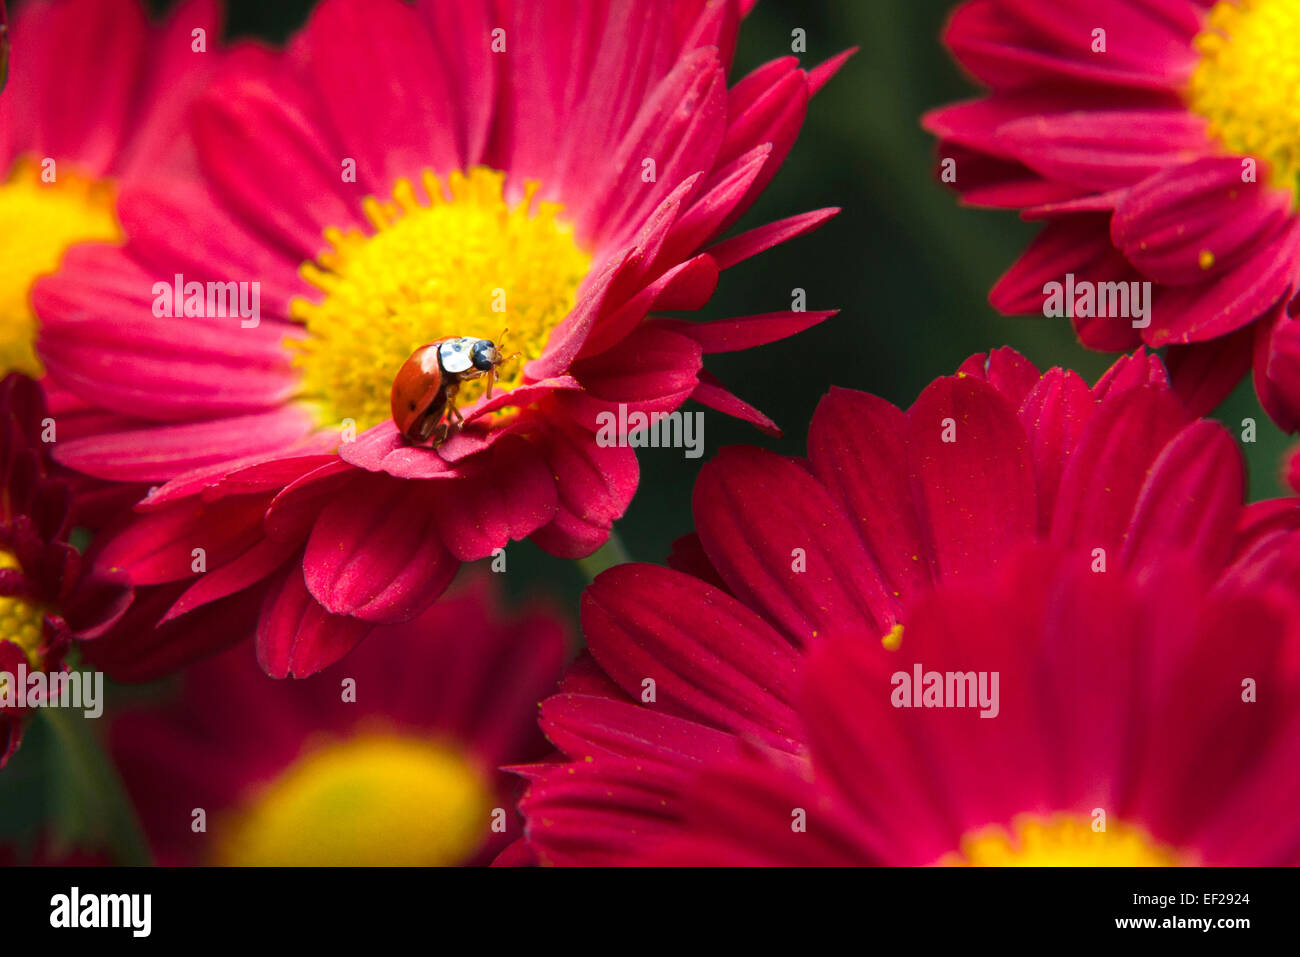 Ladybug crawling on red chrysanthemum flowers in fall garden. Stock Photo